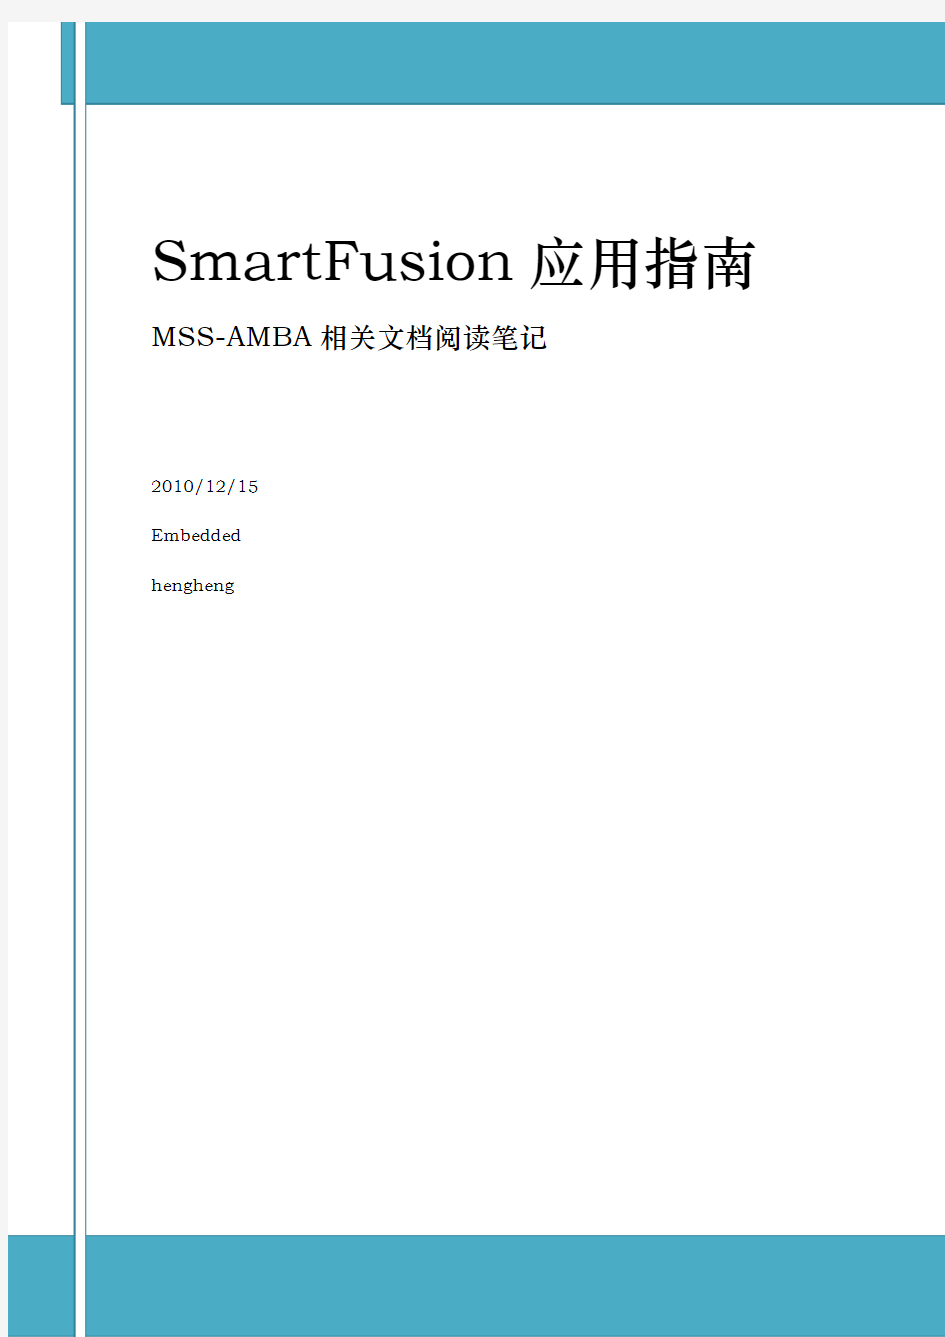 Smartfusion_AMBA的指南